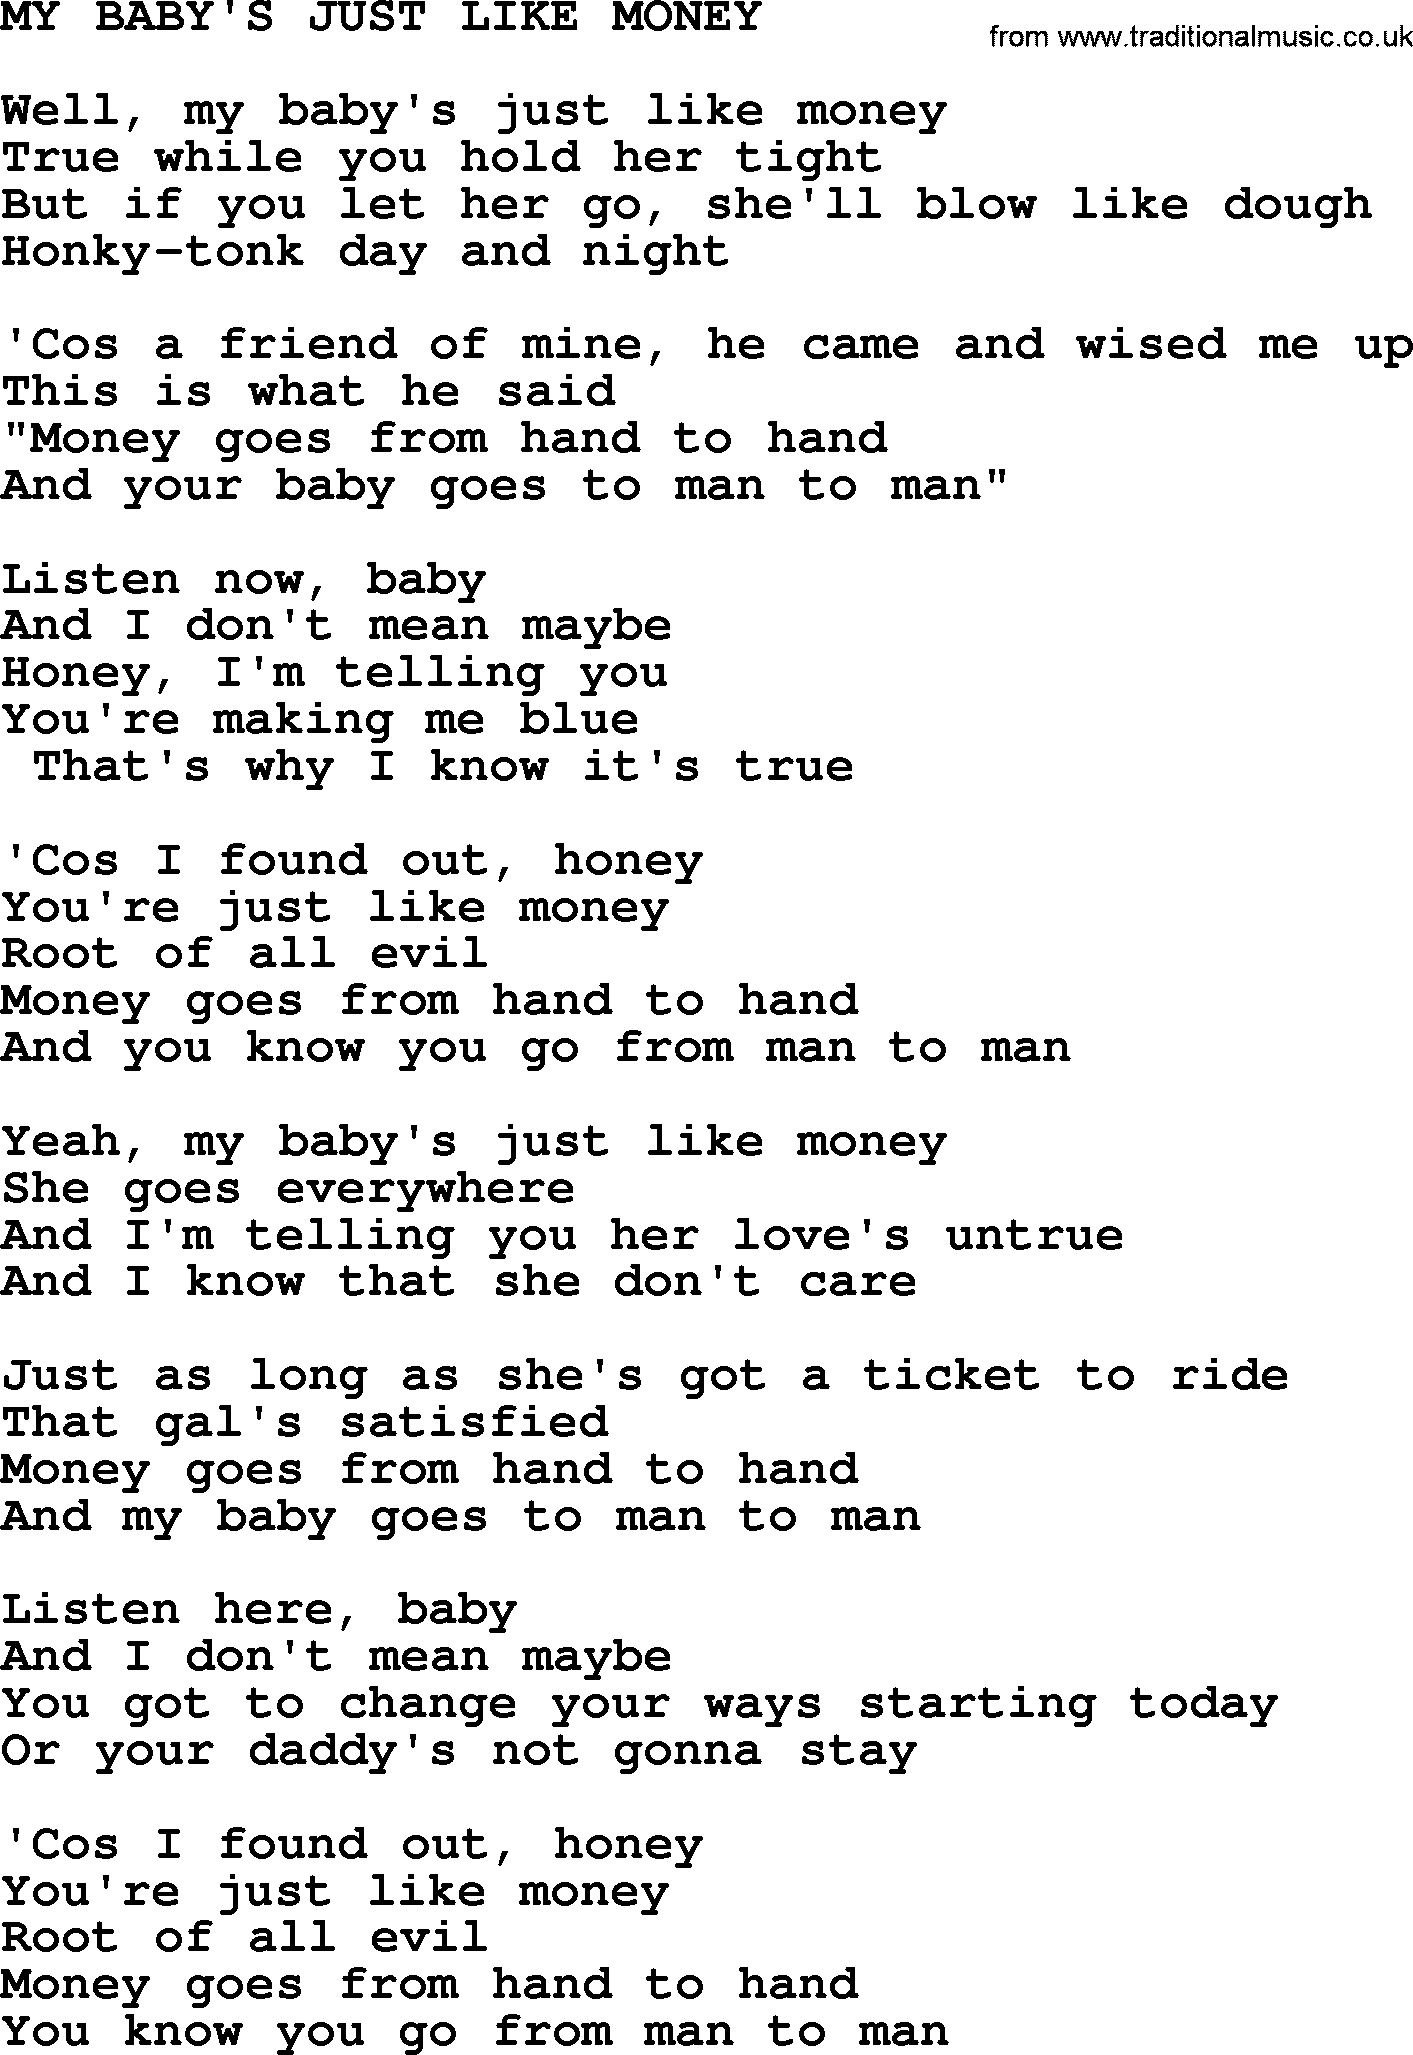 Merle Haggard song: My Baby's Just Like Money, lyrics.